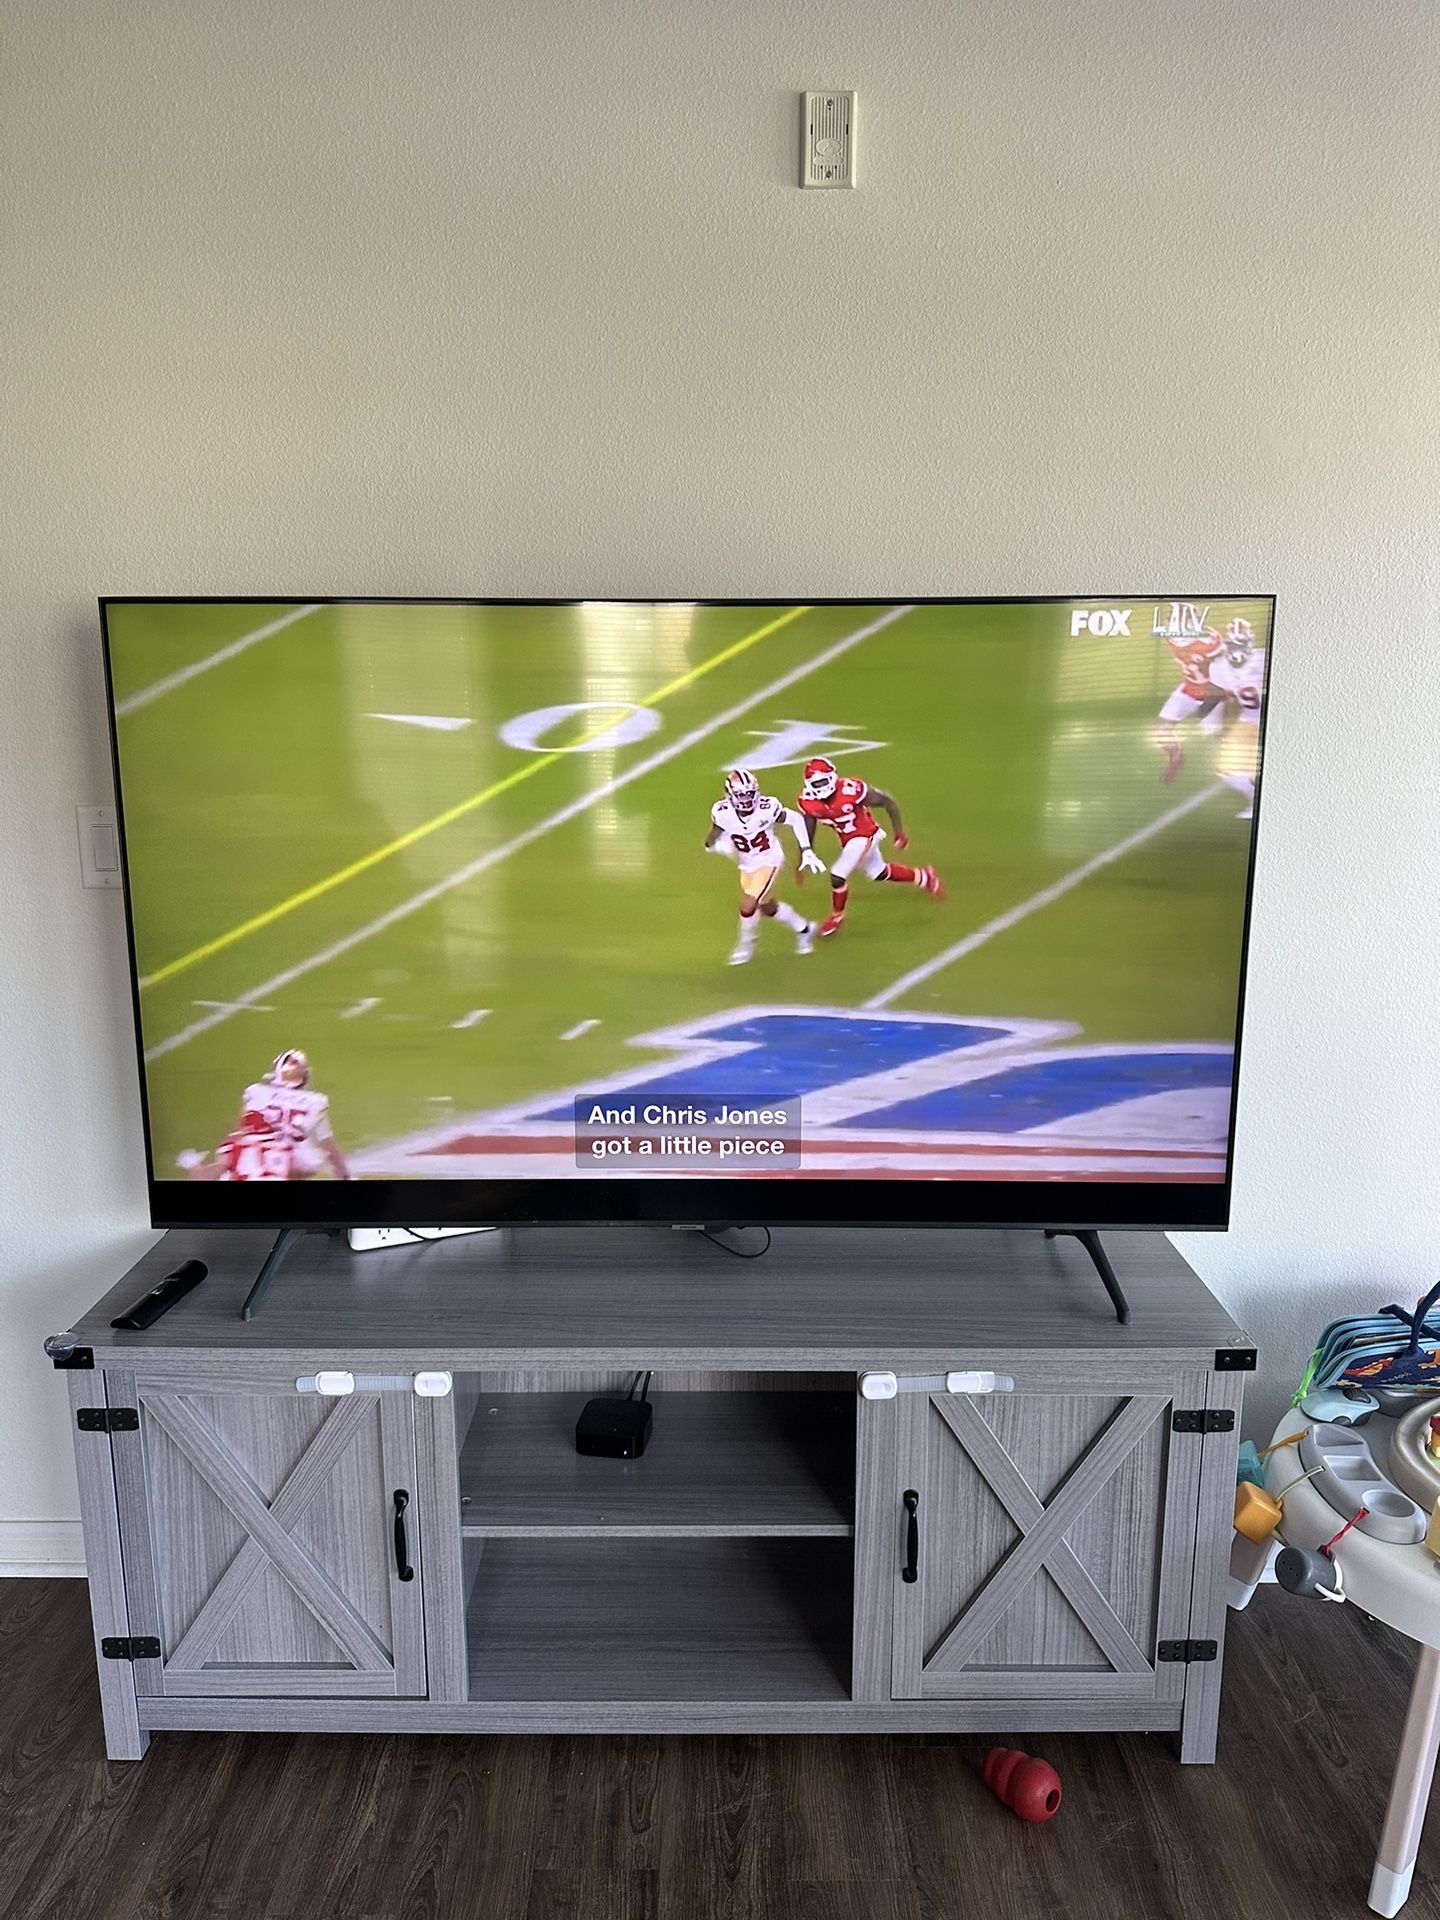 Super Bowl Special 55 Inch Samsung Tv $250